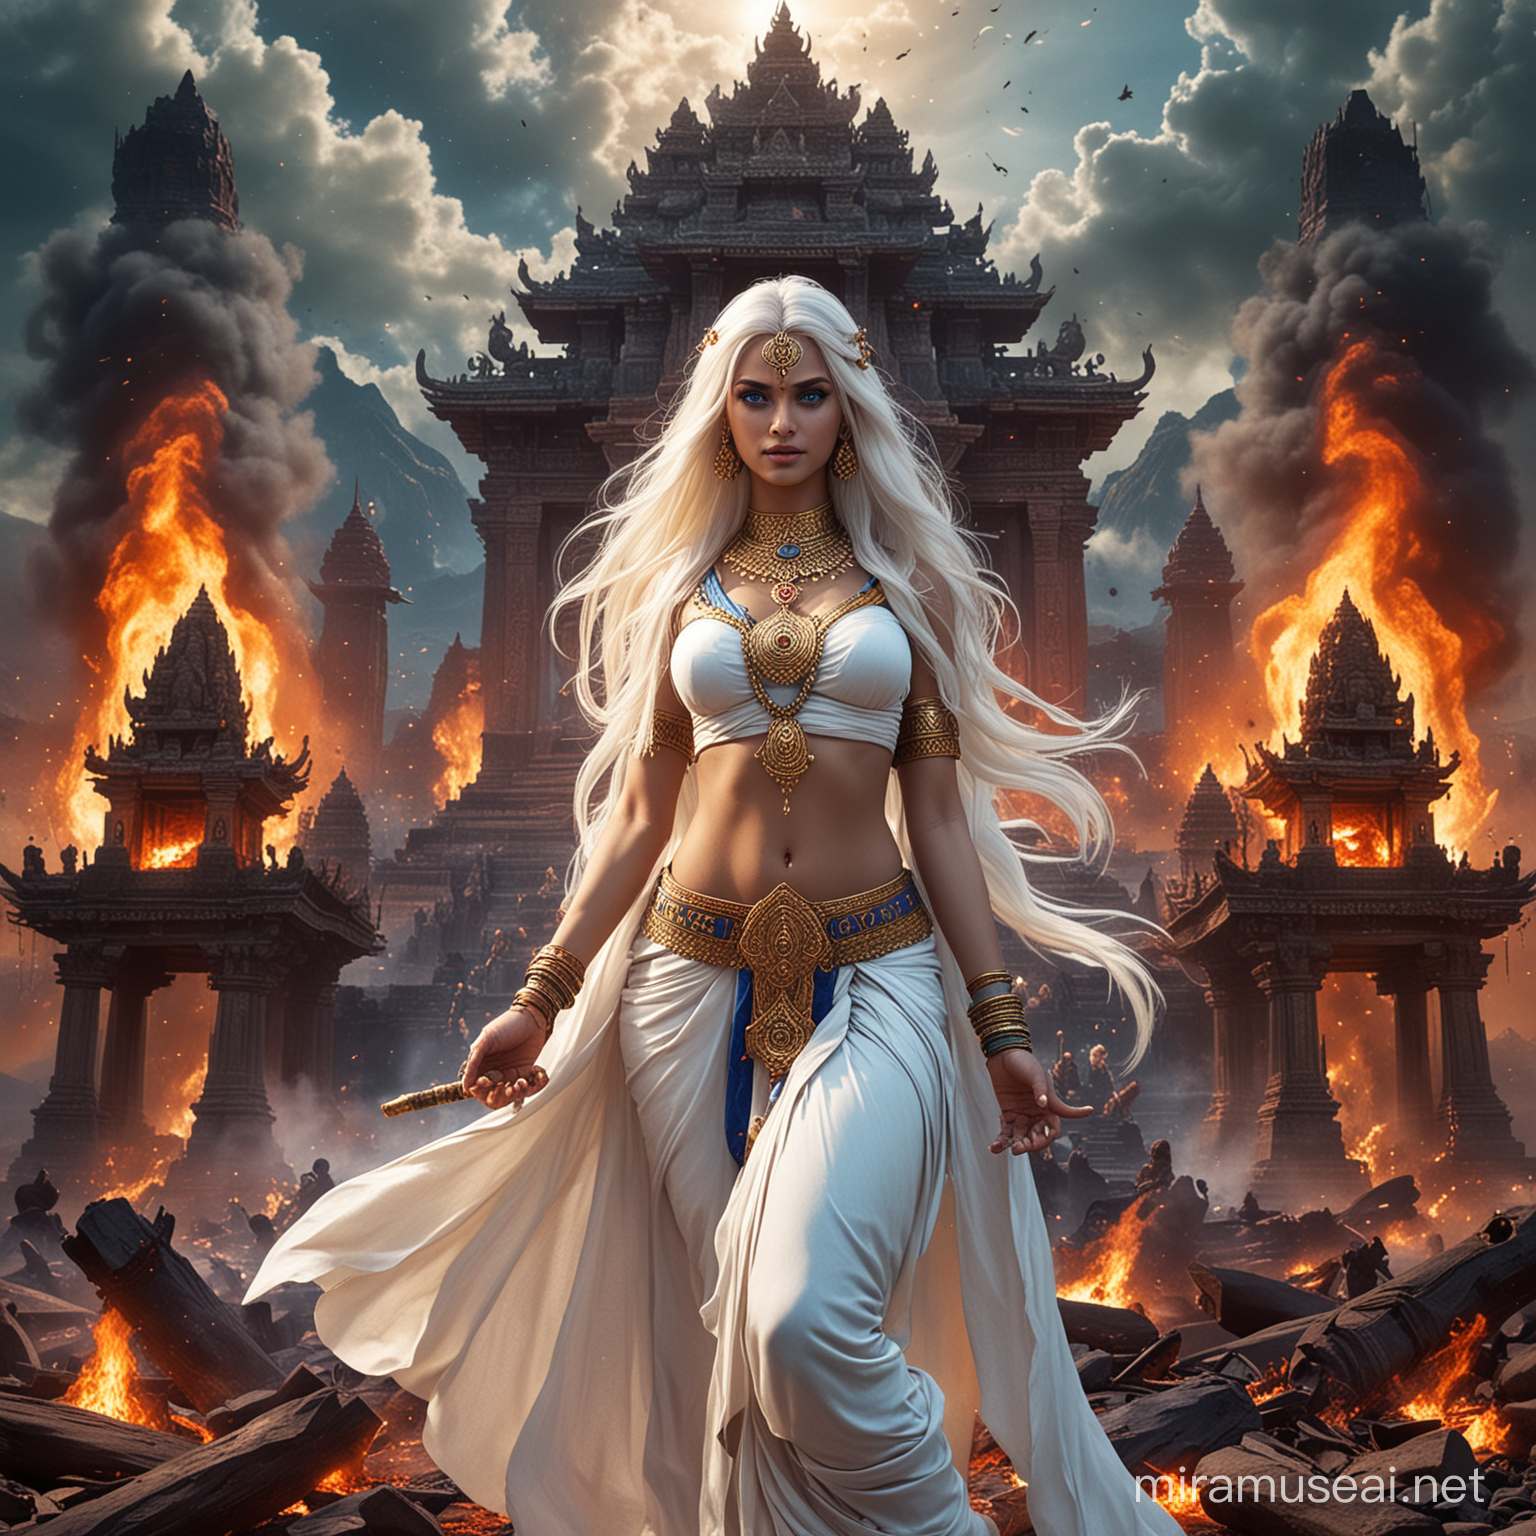 Hindu Empress Goddess Summoning Cosmic Energy in Mystical Battle